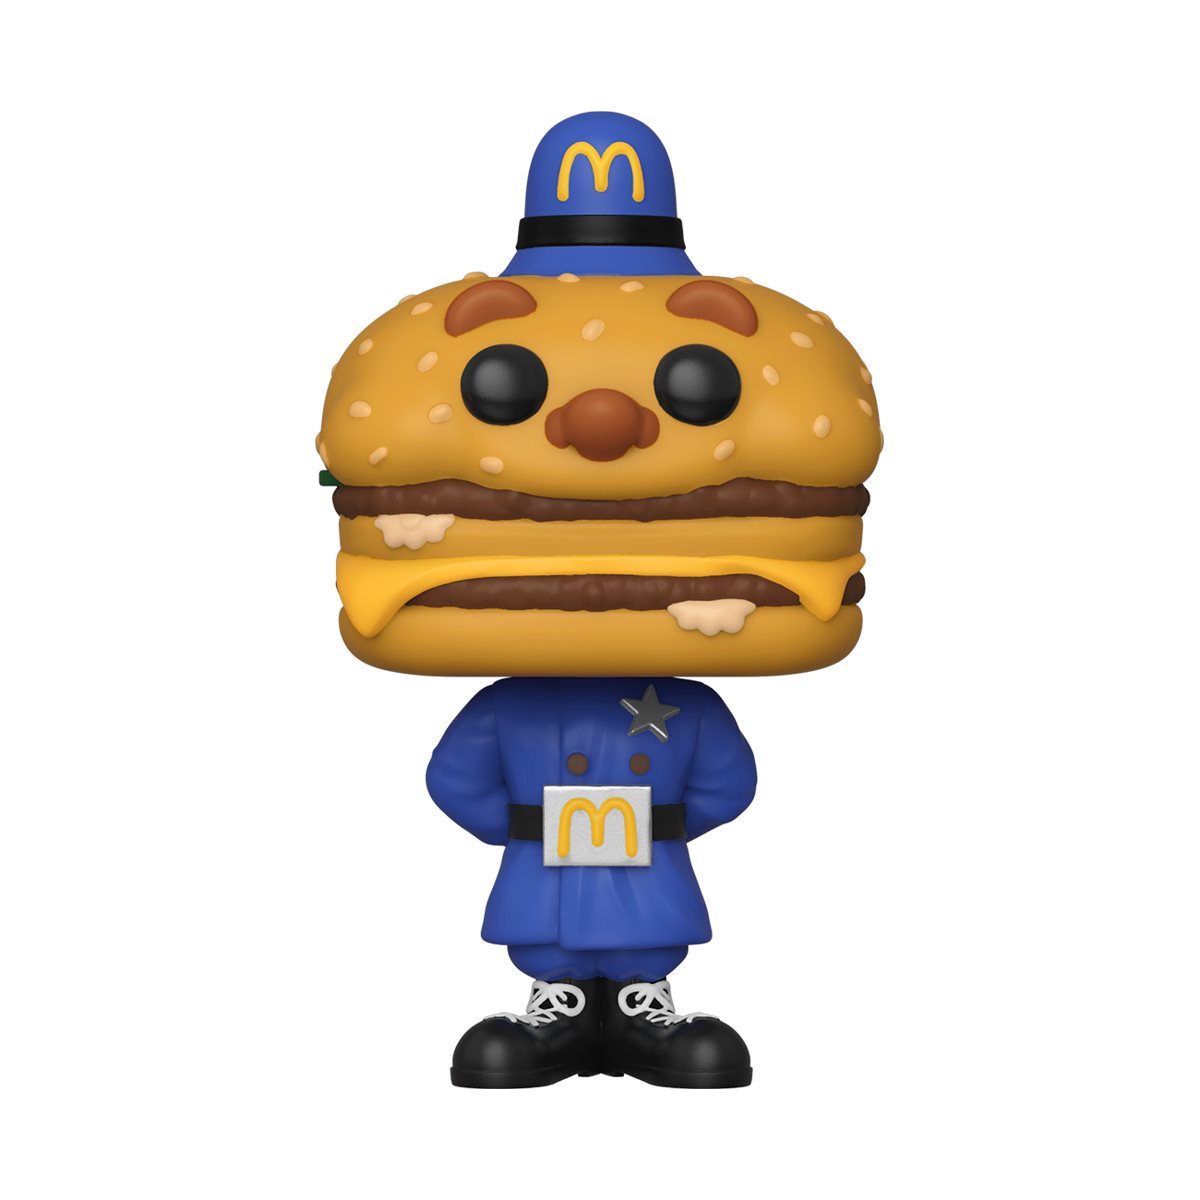 Funko Pop! Vinyl: McDonald's - Officer Mac #89 for sale online